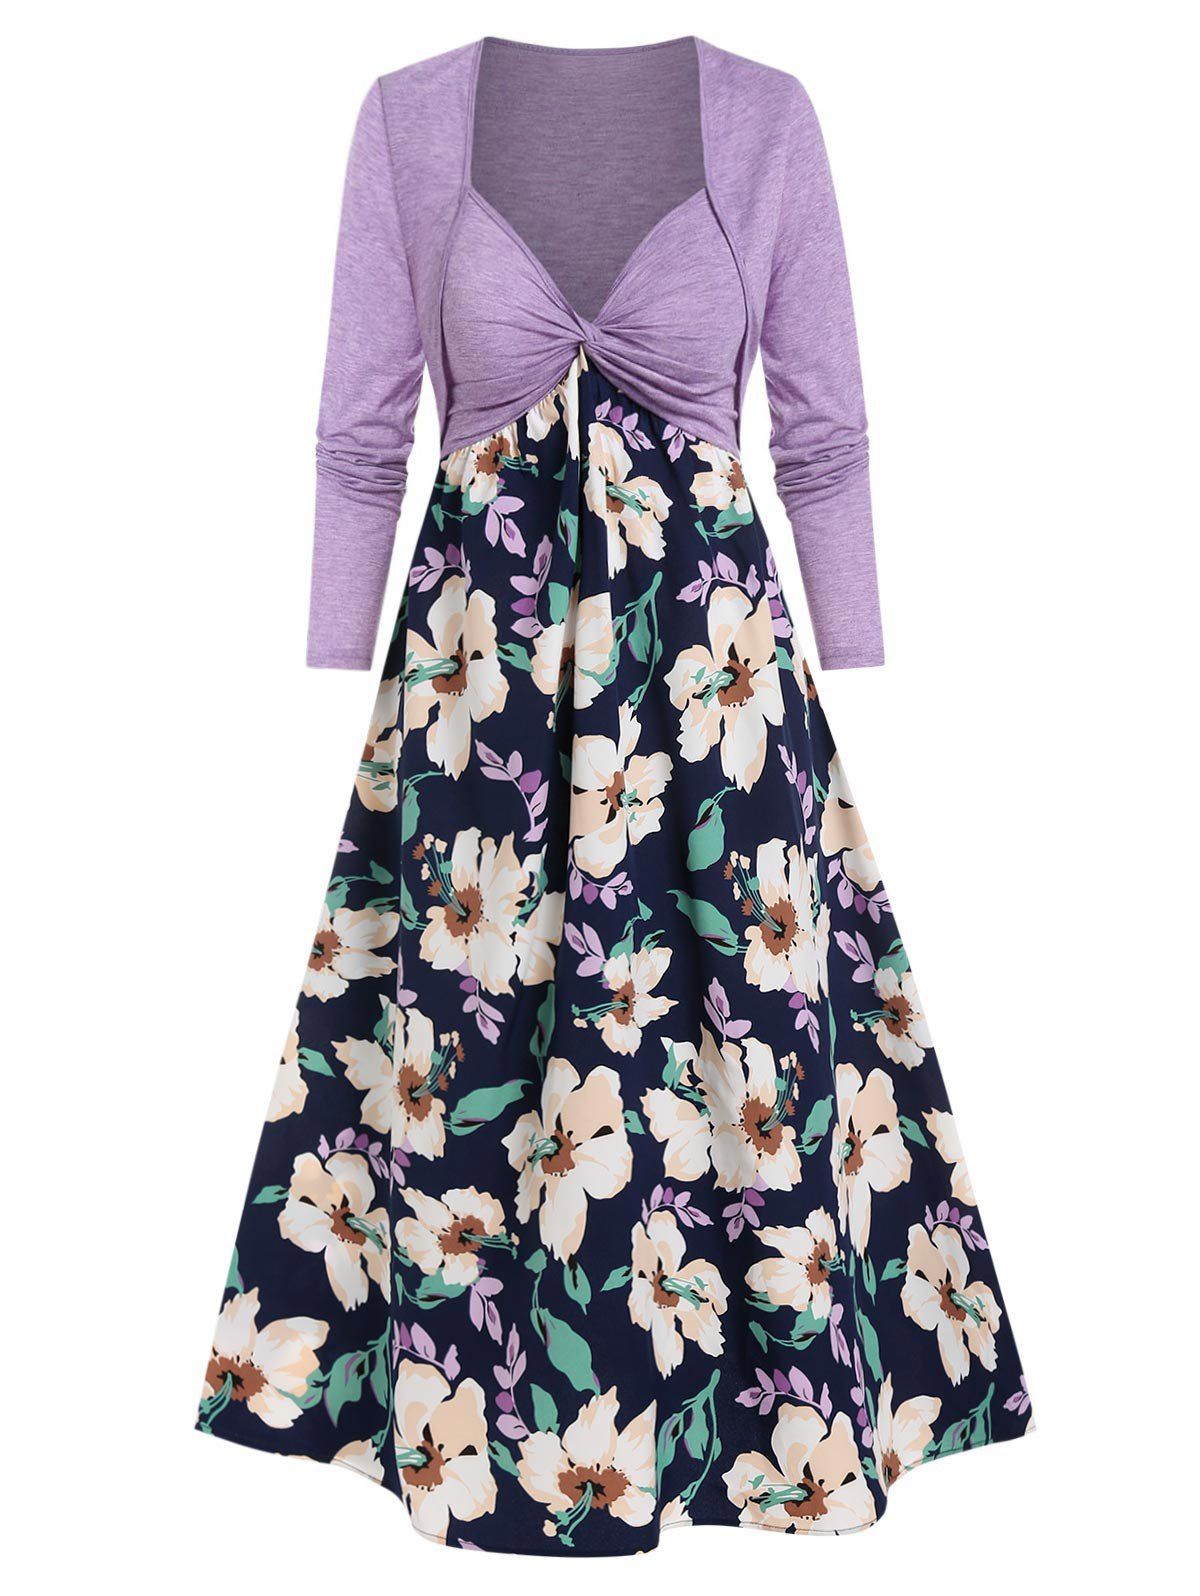 Flower Print Twist Front Cami Dress and Cropped Cardigan - LIGHT PURPLE XXXL